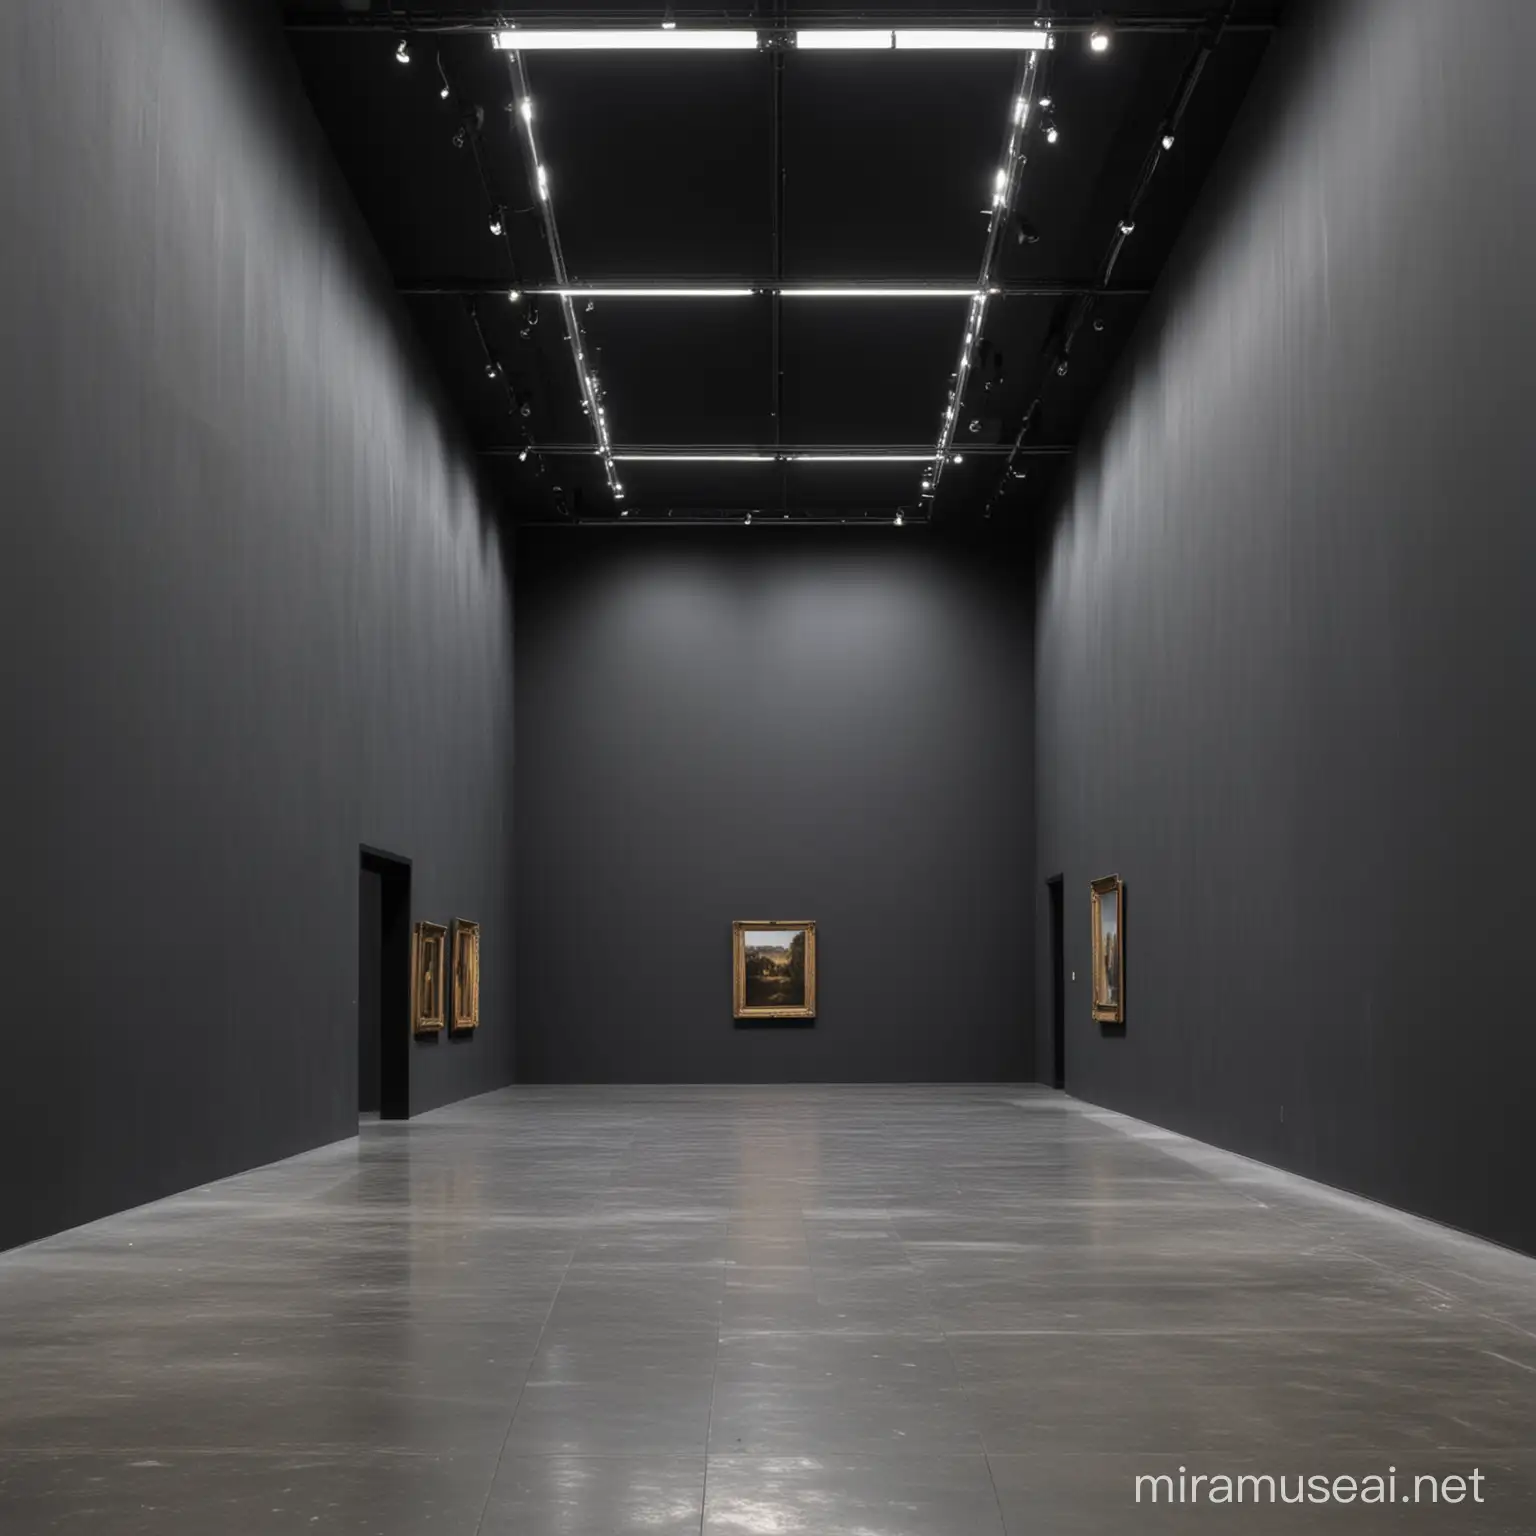 empty museum walls exhibition space, dark grey walls, high ceilings